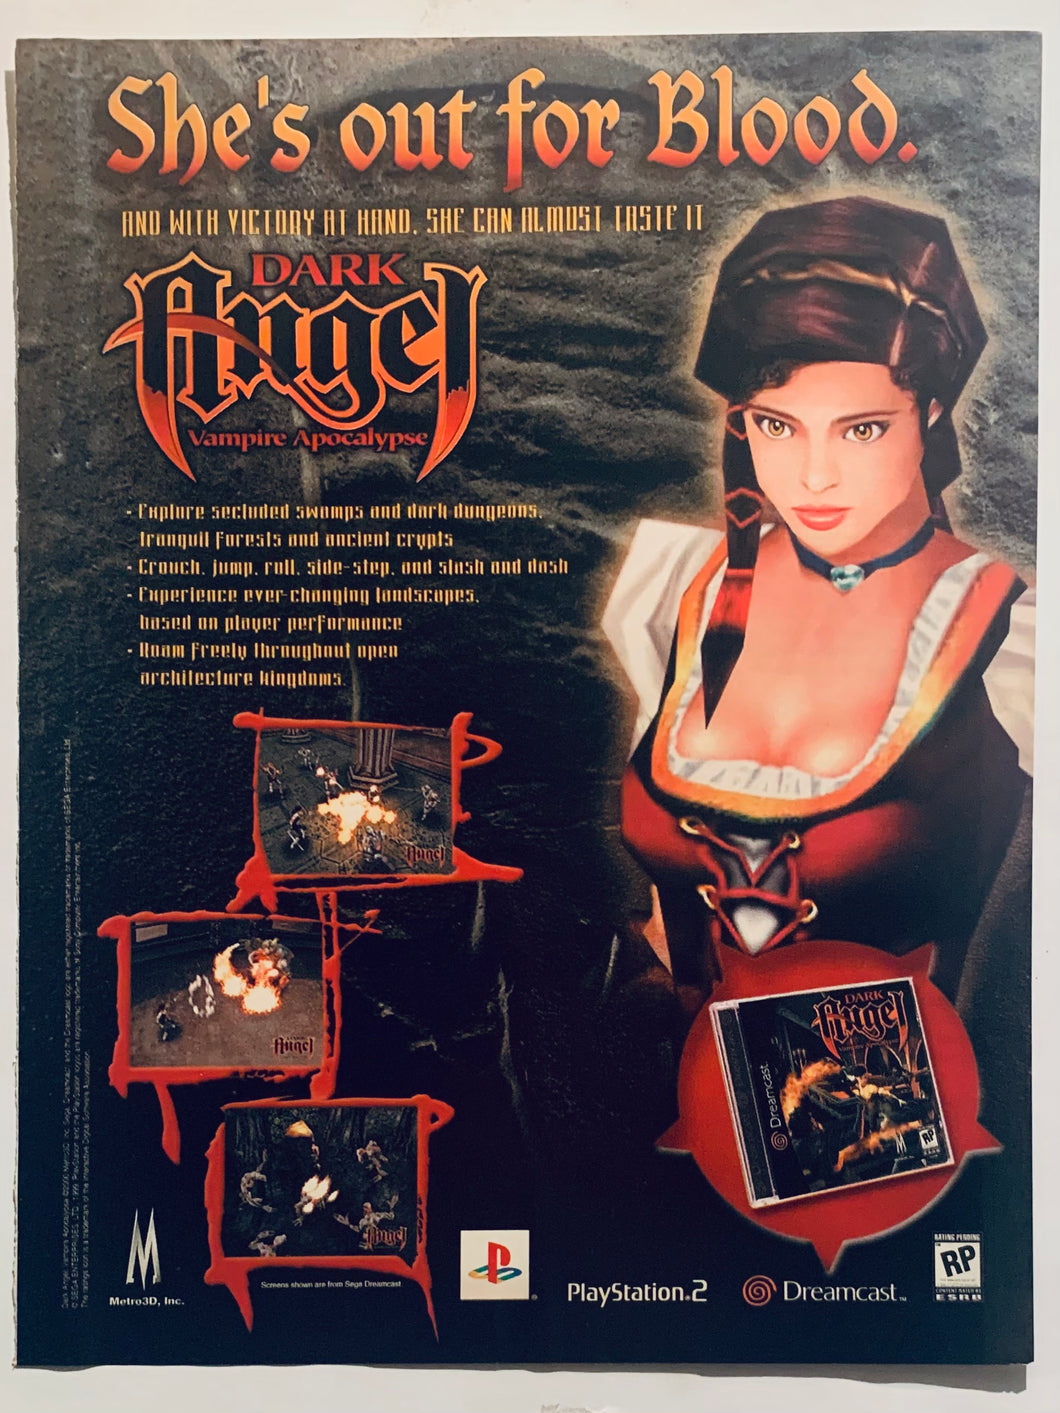 Dark Angel: Vampire Apocalypse - PS2 Dreamcast - Original Vintage Advertisement - Print Ads - Laminated A4 Poster